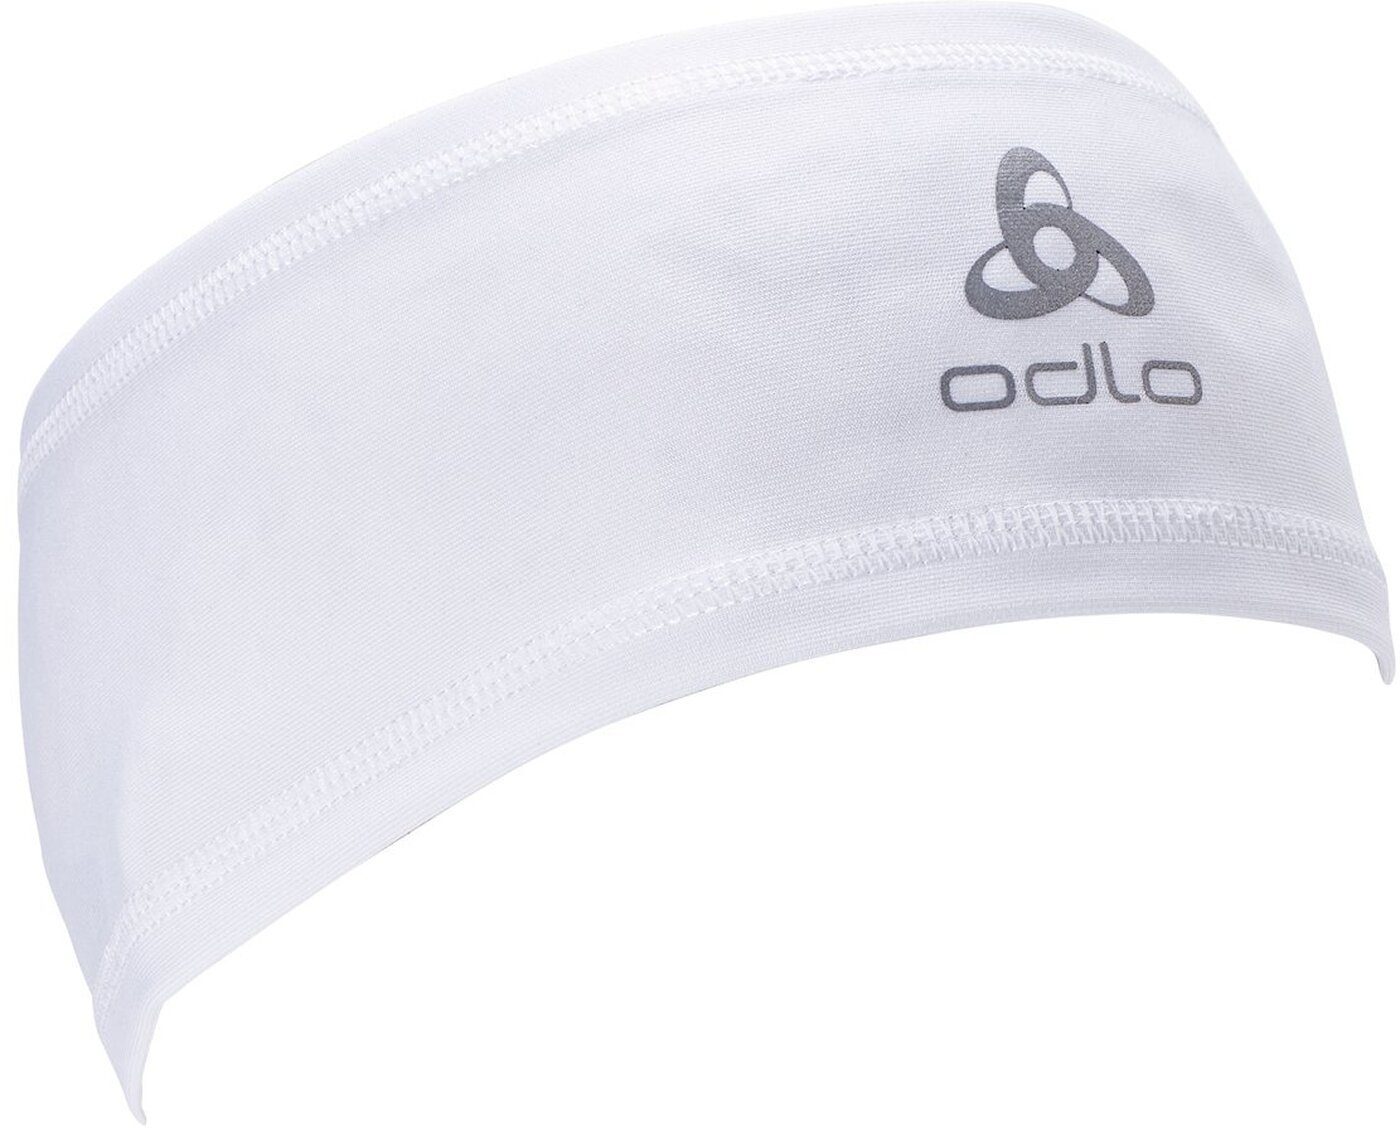 Odlo Headband POLYKNIT Stirnband white ECO LIGHT 10000